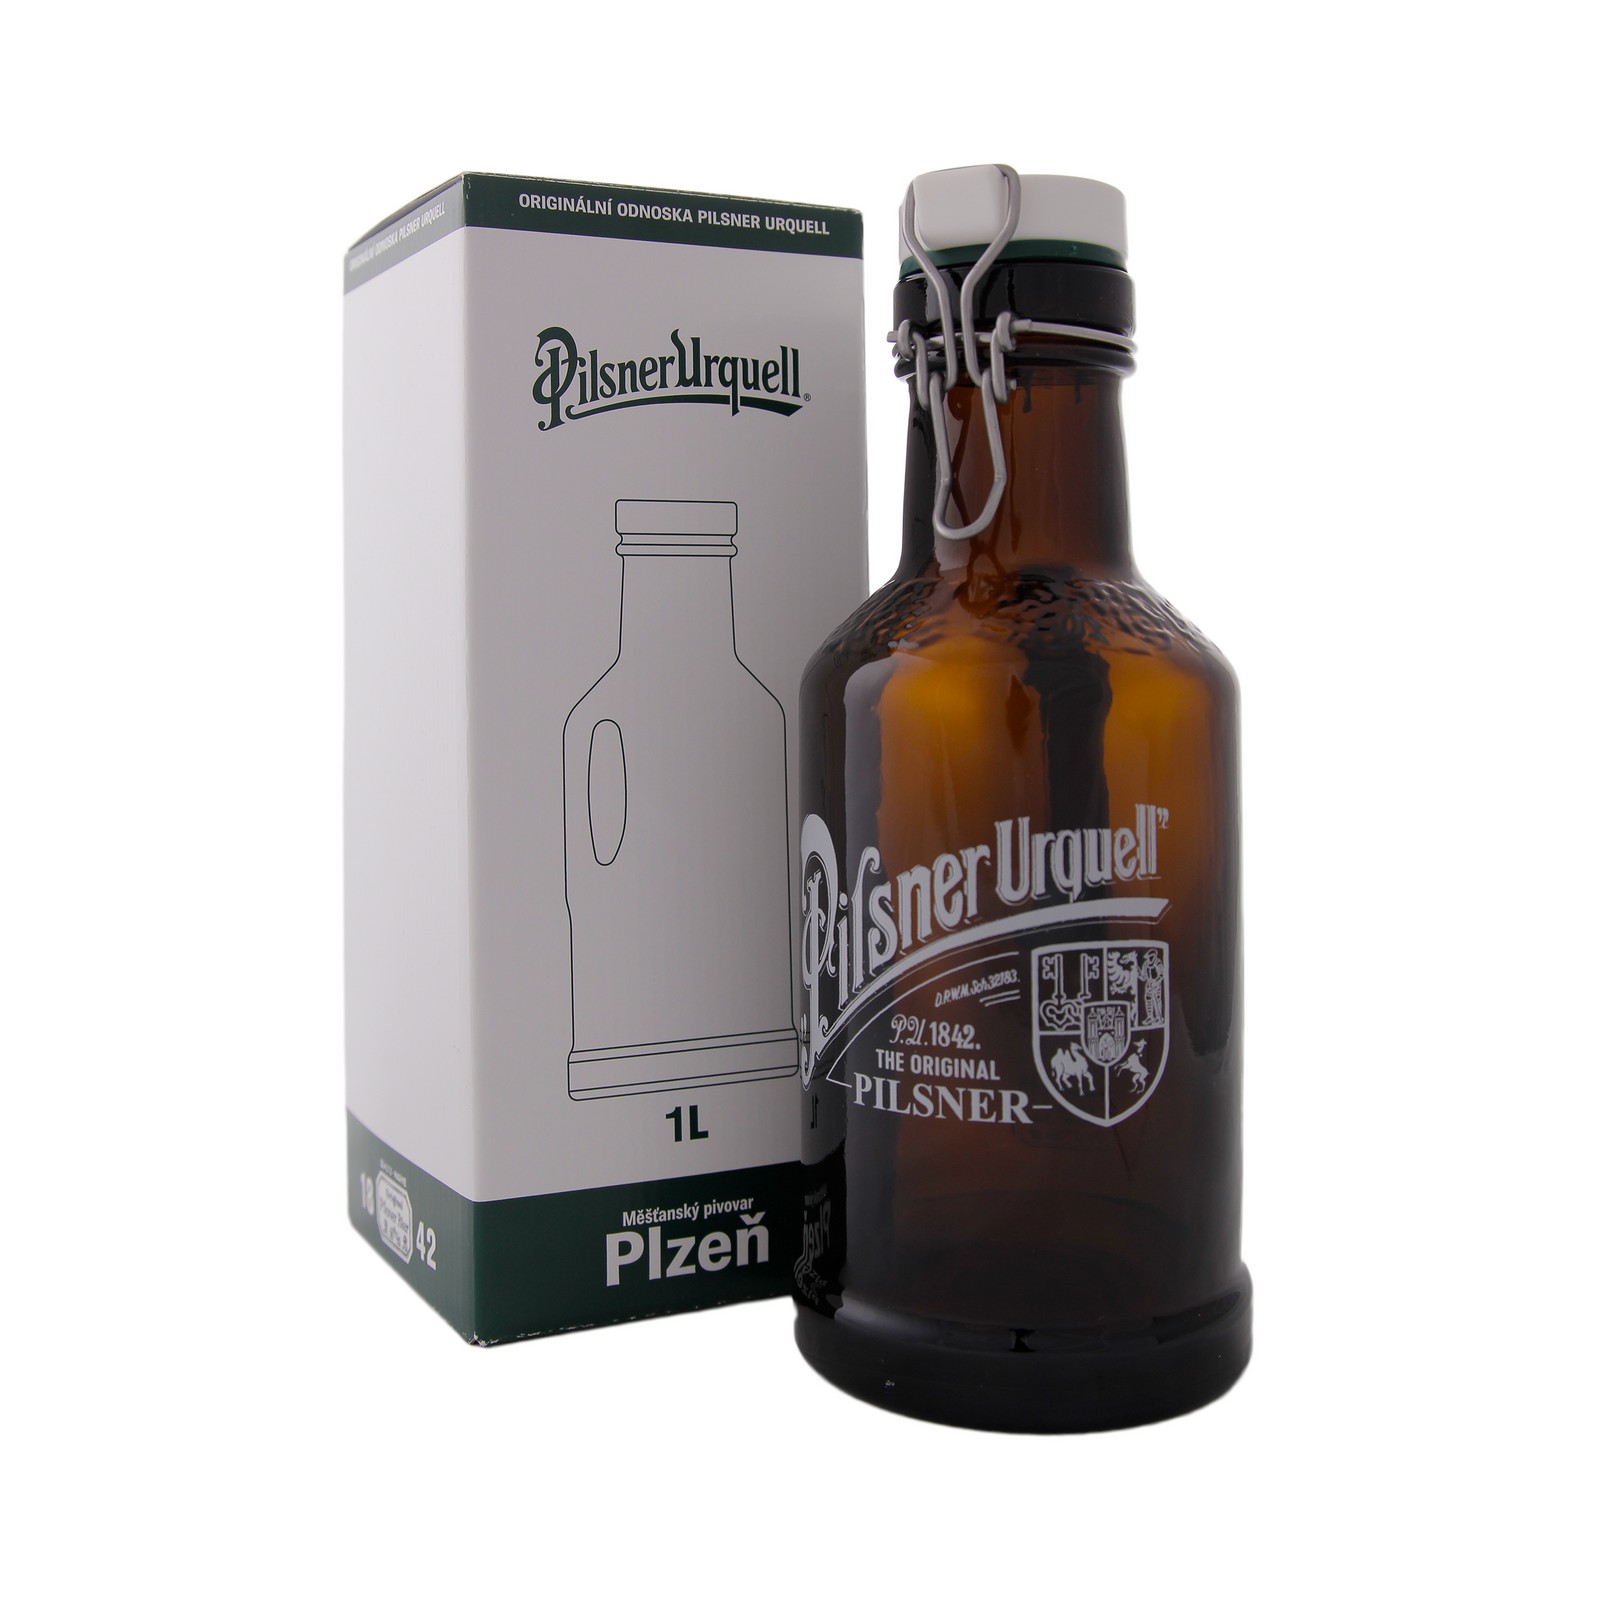 One-litre Pilsner Urquell Growler in gift box